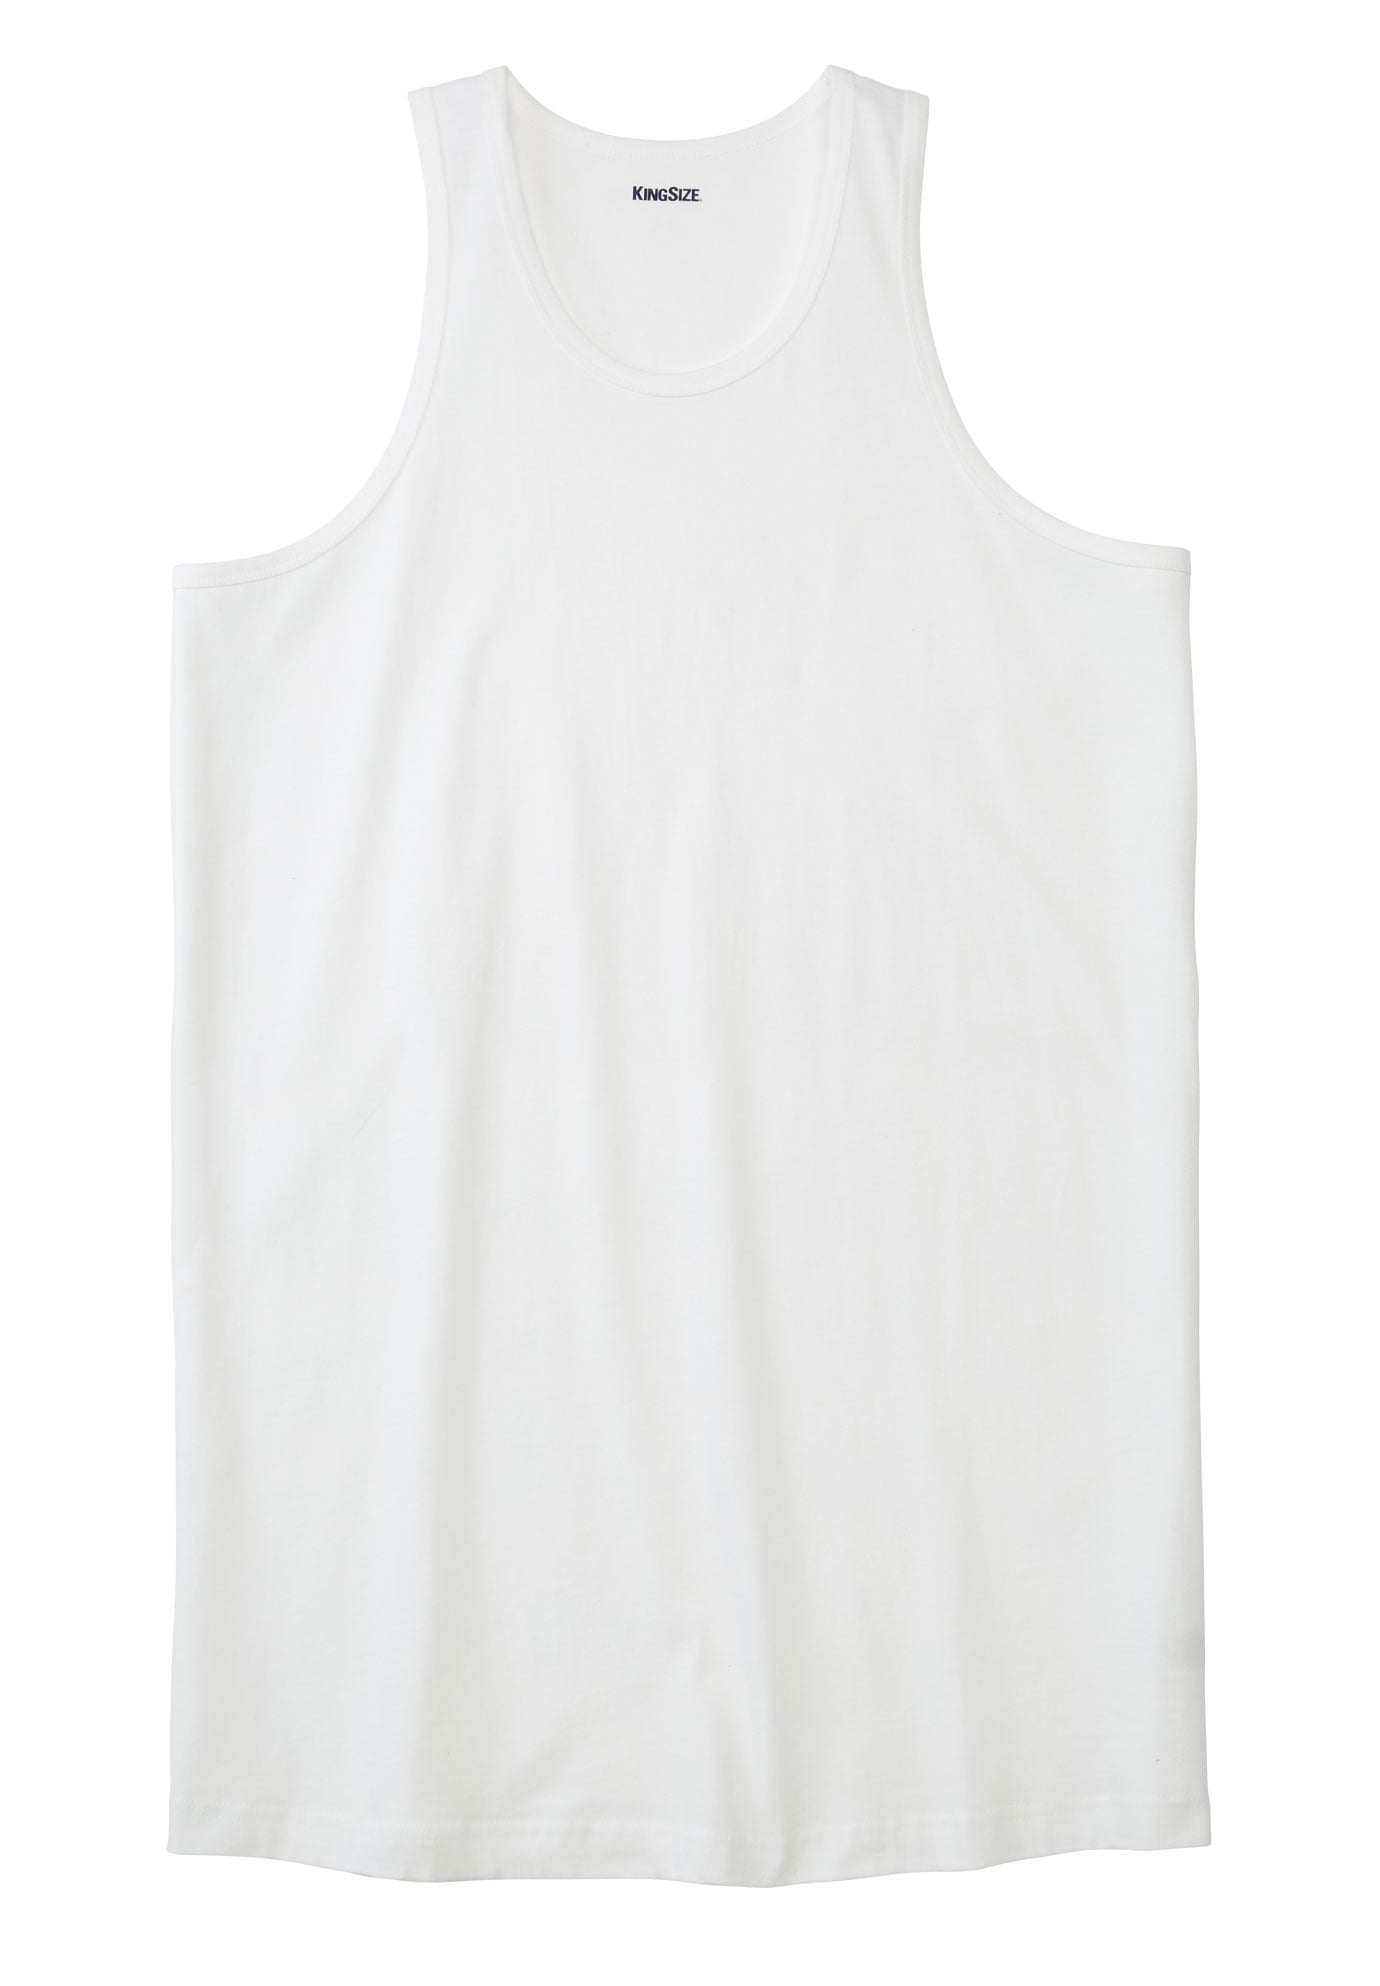 KingSize Men's Big & Tall Shrink-Less Lightweight Longer-Length Tank Shirt